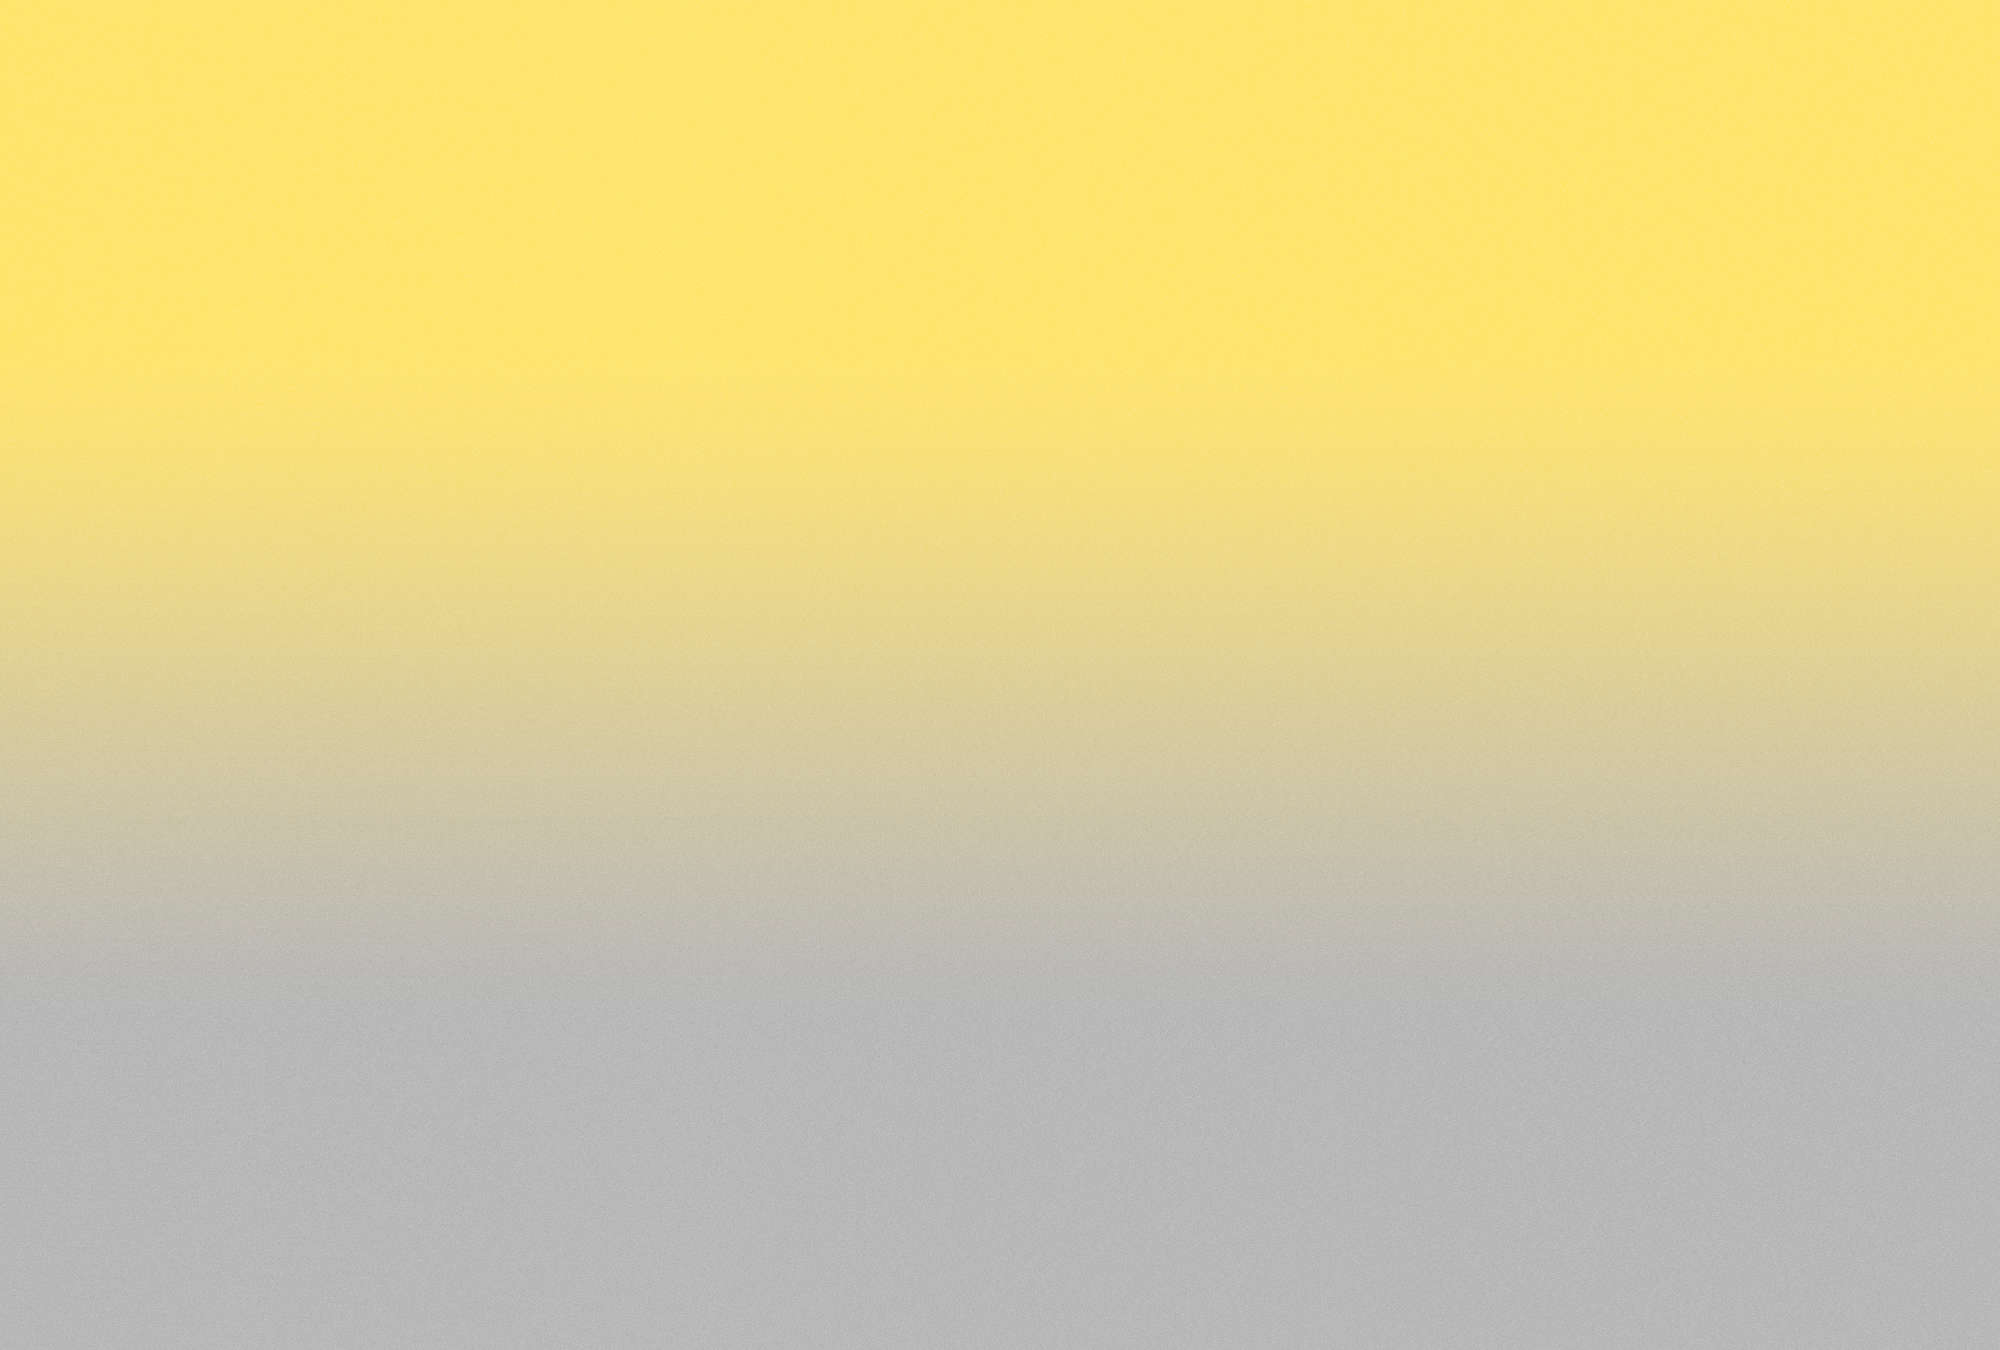             Colour Studio 1 – Fototapete Gelb & Grau Trendfarben Ombre Effekt
        